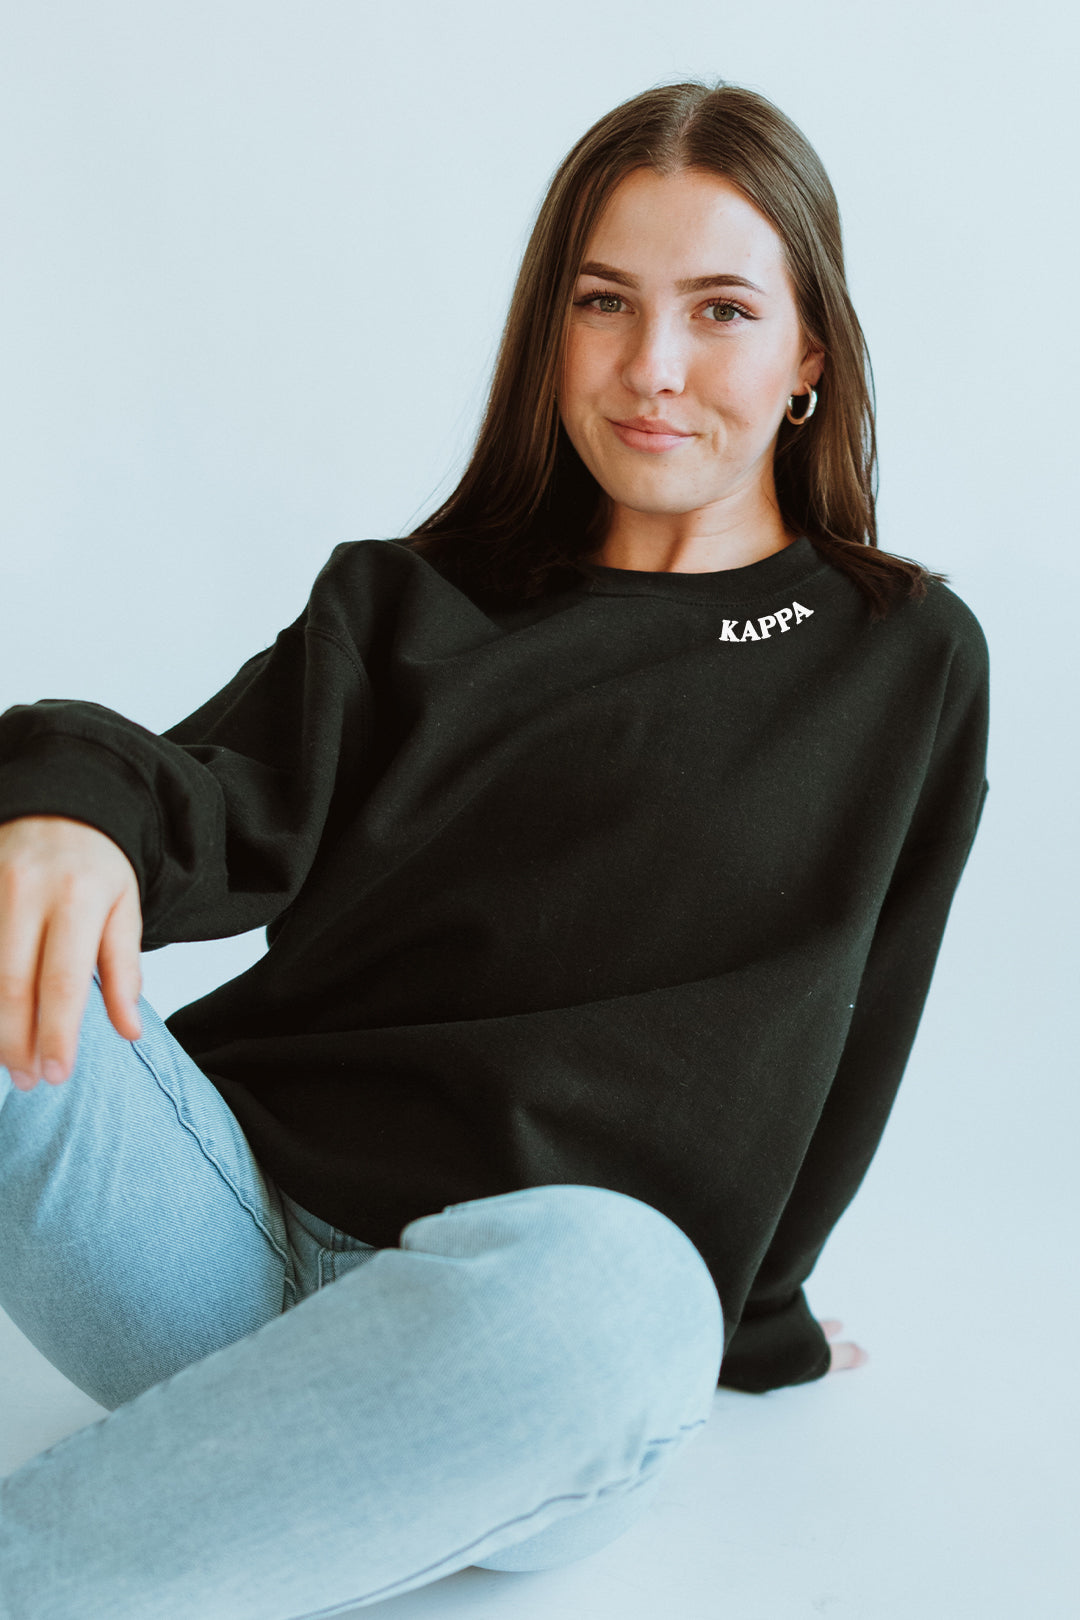 Black sweatshirt with White Collar text - Kappa